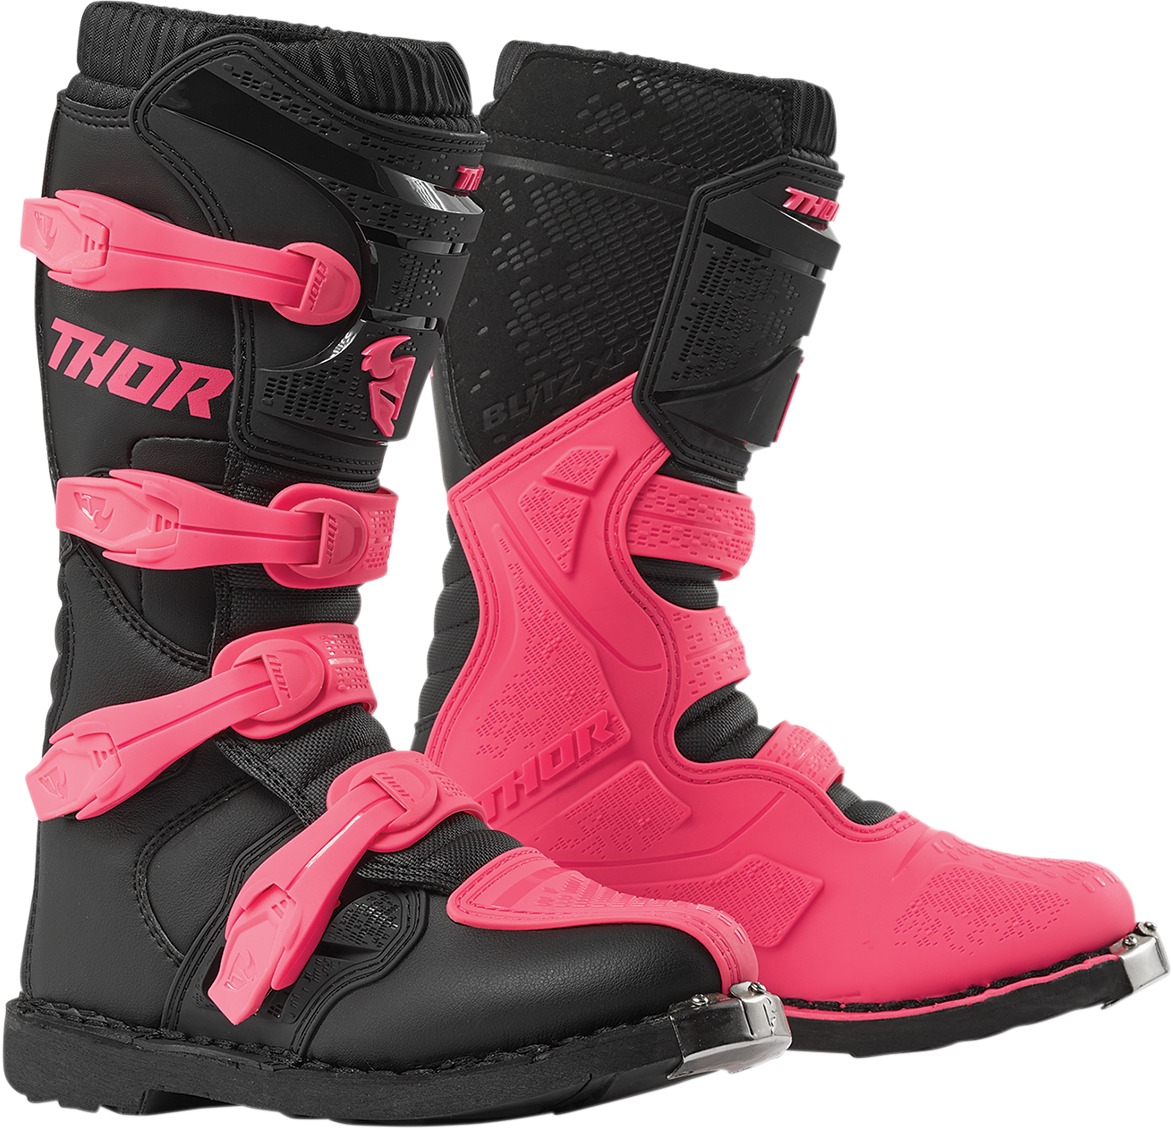 Blitz XP Dirt Bike Boots - Black & Pink Women's Size 9 - Click Image to Close